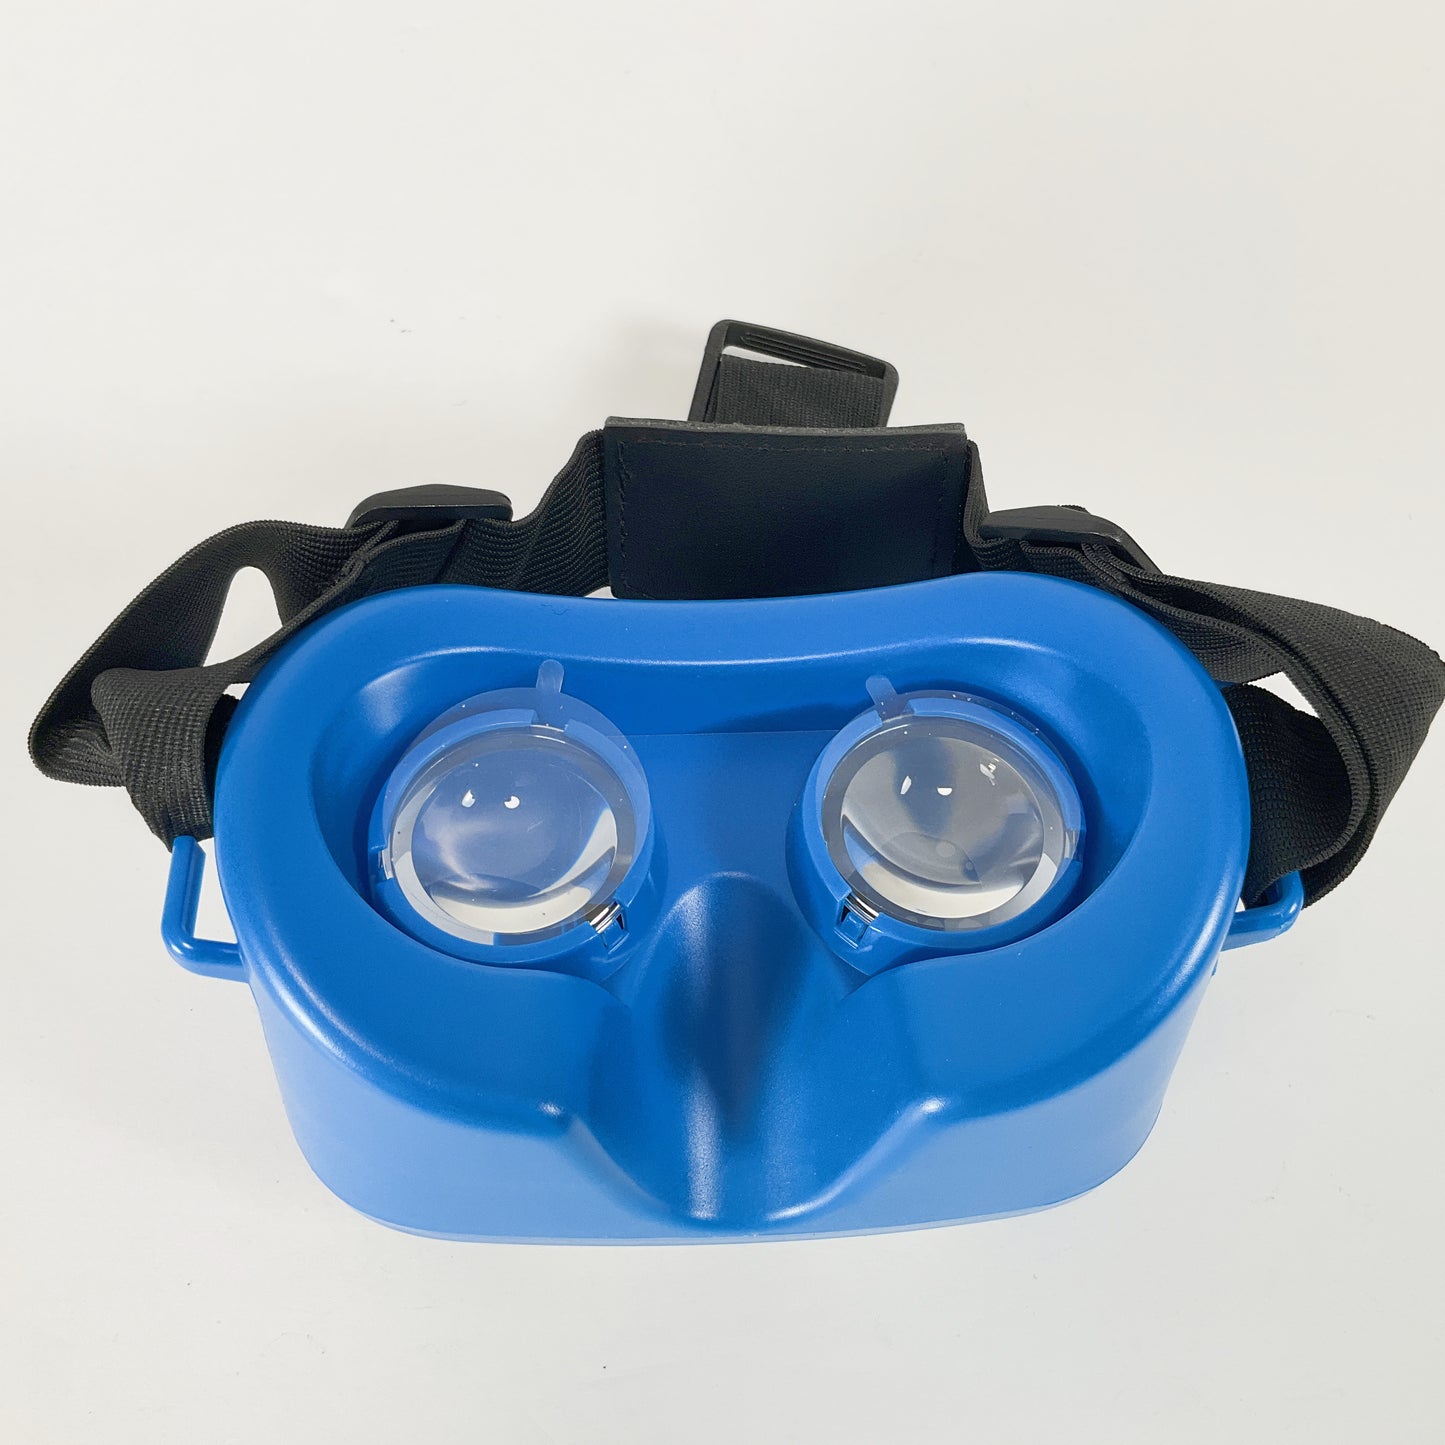 Typo - STAR WARS Virtual Reality Headset